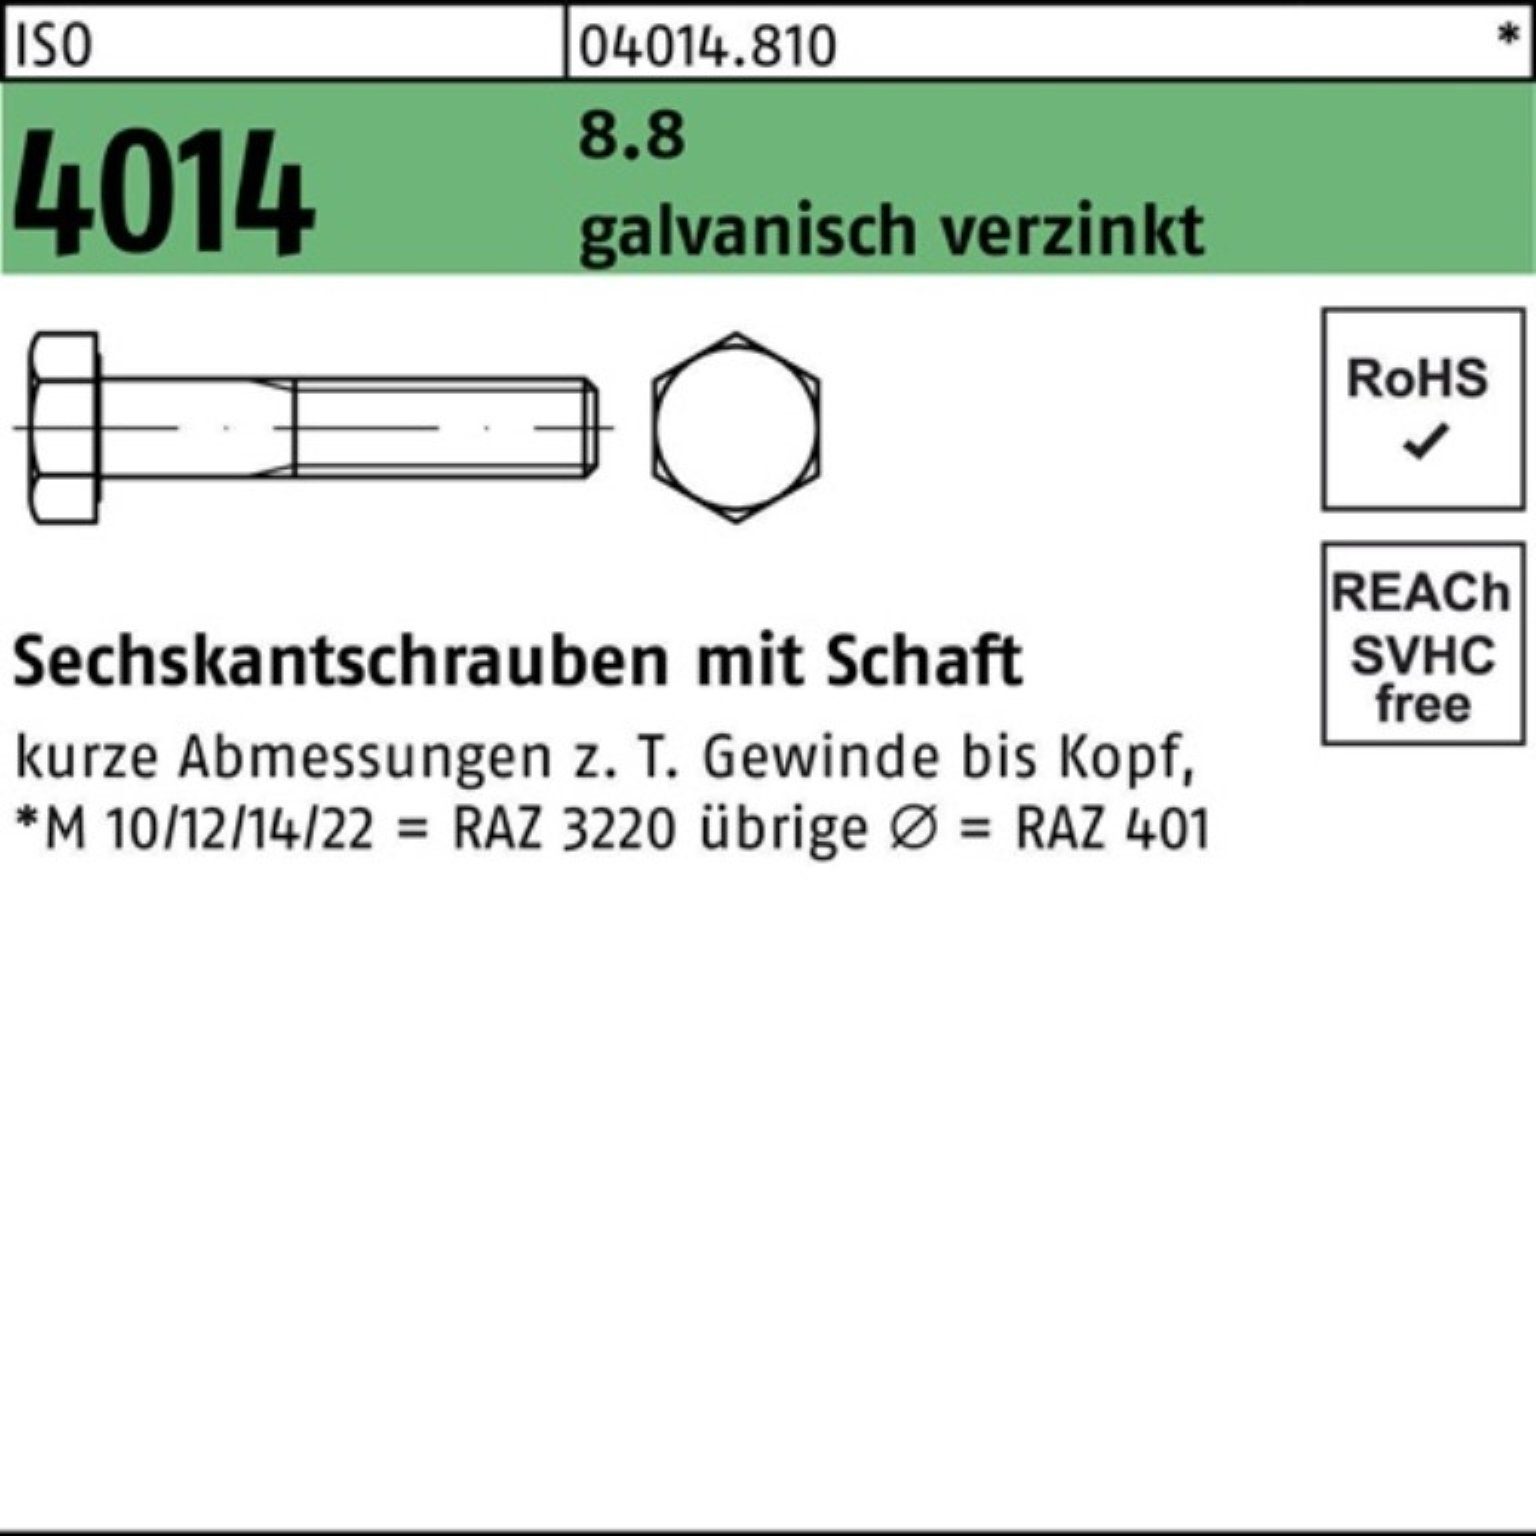 Bufab Sechskantschraube 100er Pack Sechskantschraube ISO 4014 Schaft M20x 390 8.8 galv.verz. 1 | Schrauben